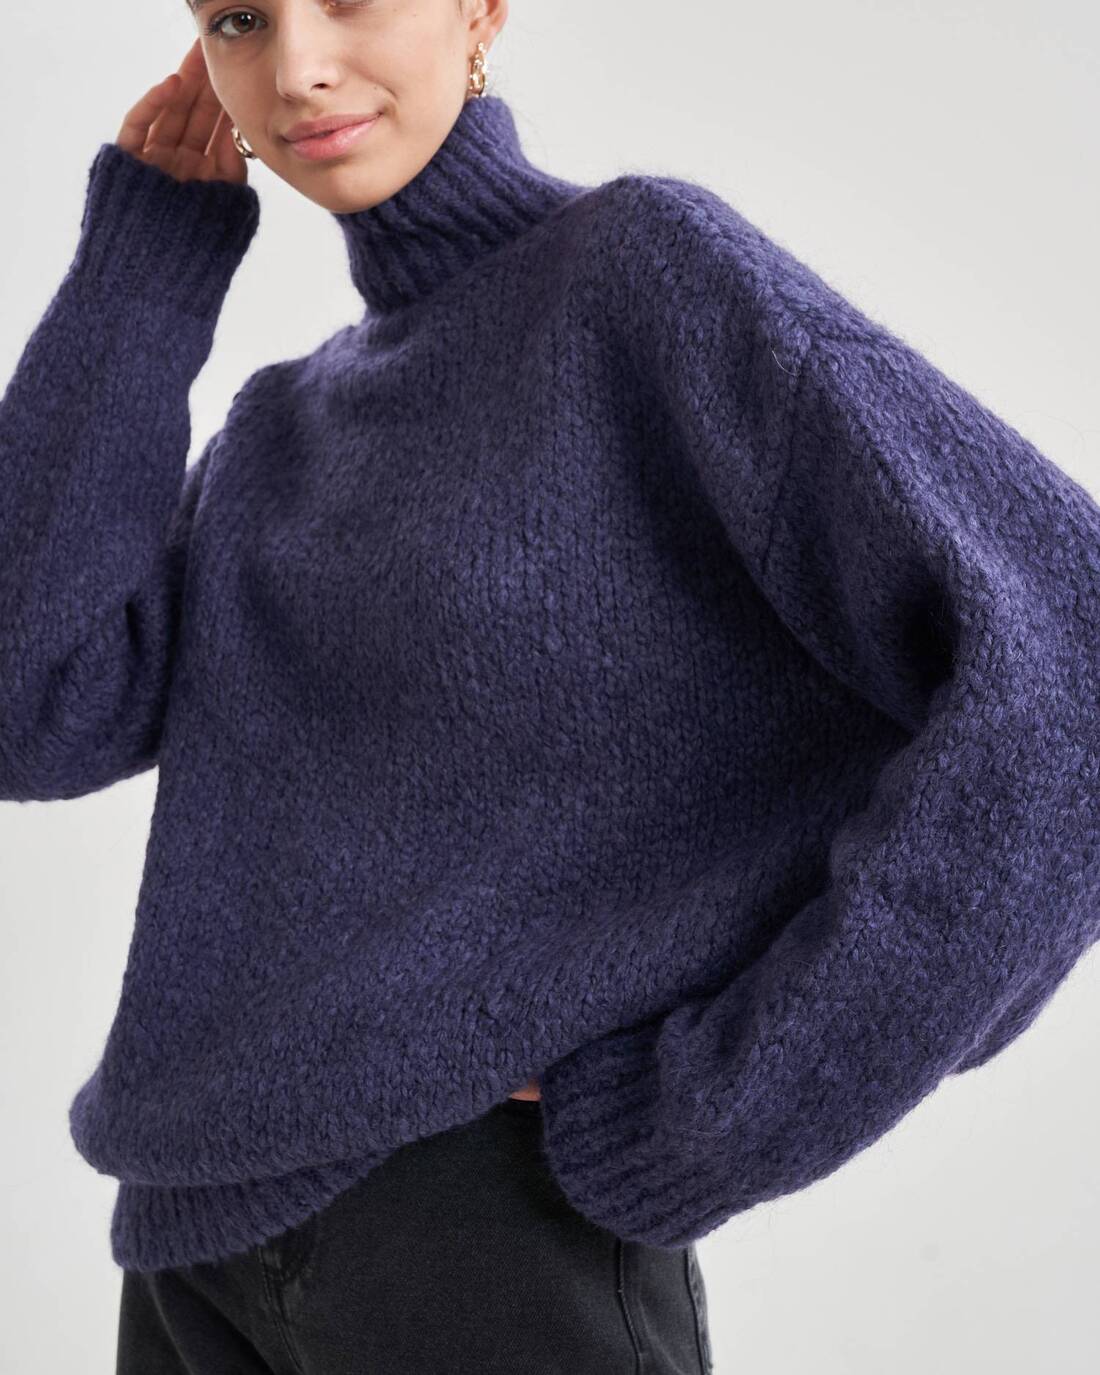 Mohair wool sweater